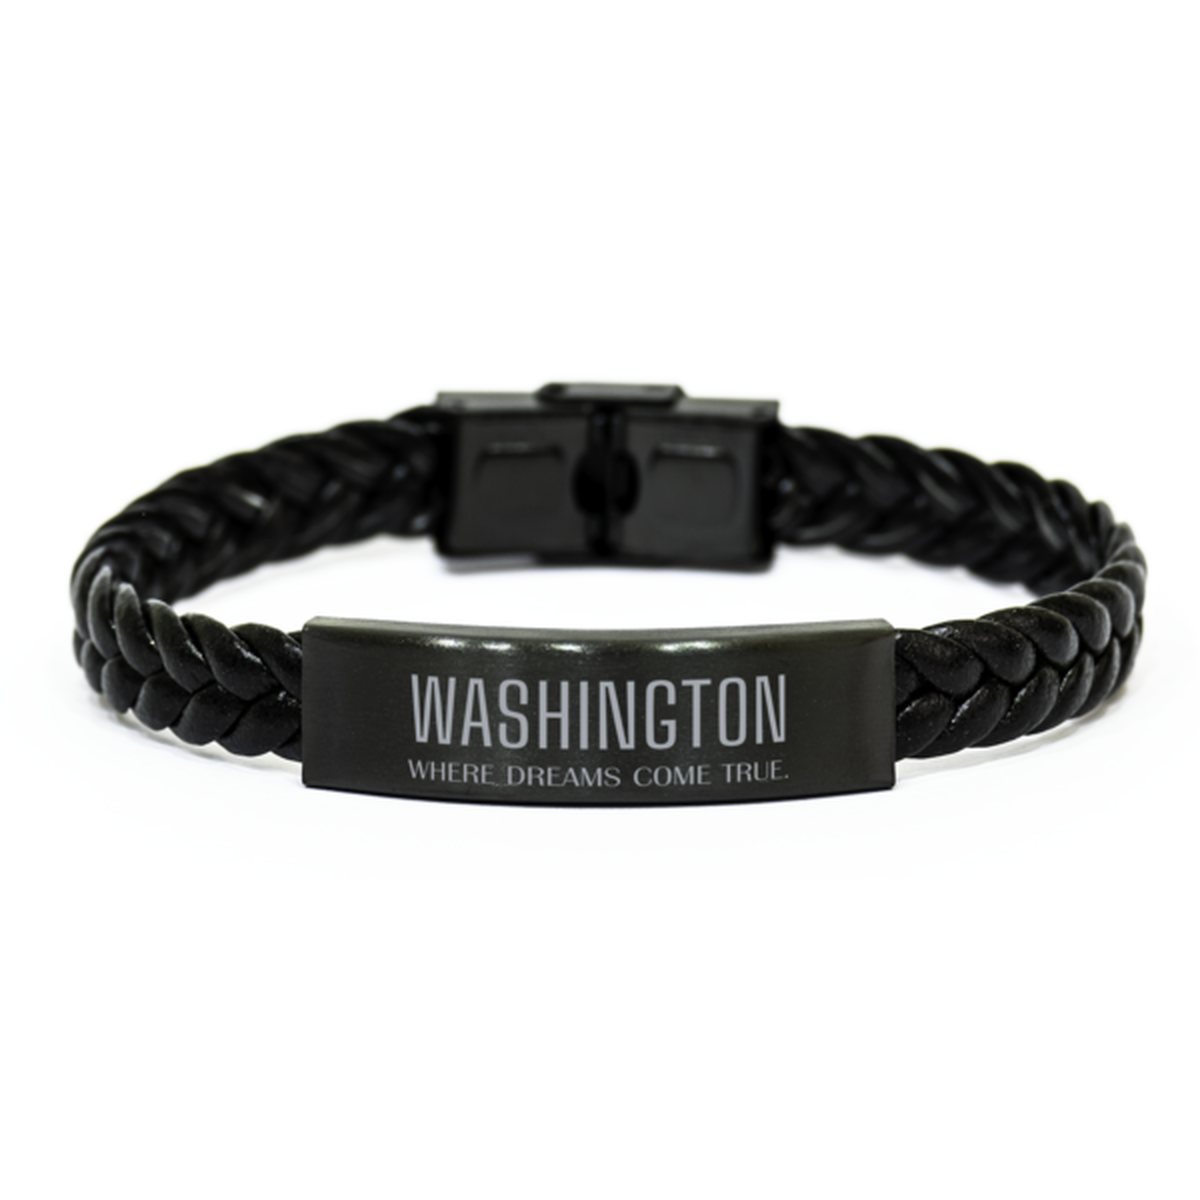 Love Washington State Braided Leather Bracelet, Washington Where dreams come true, Birthday Inspirational Gifts For Washington Men, Women, Friends